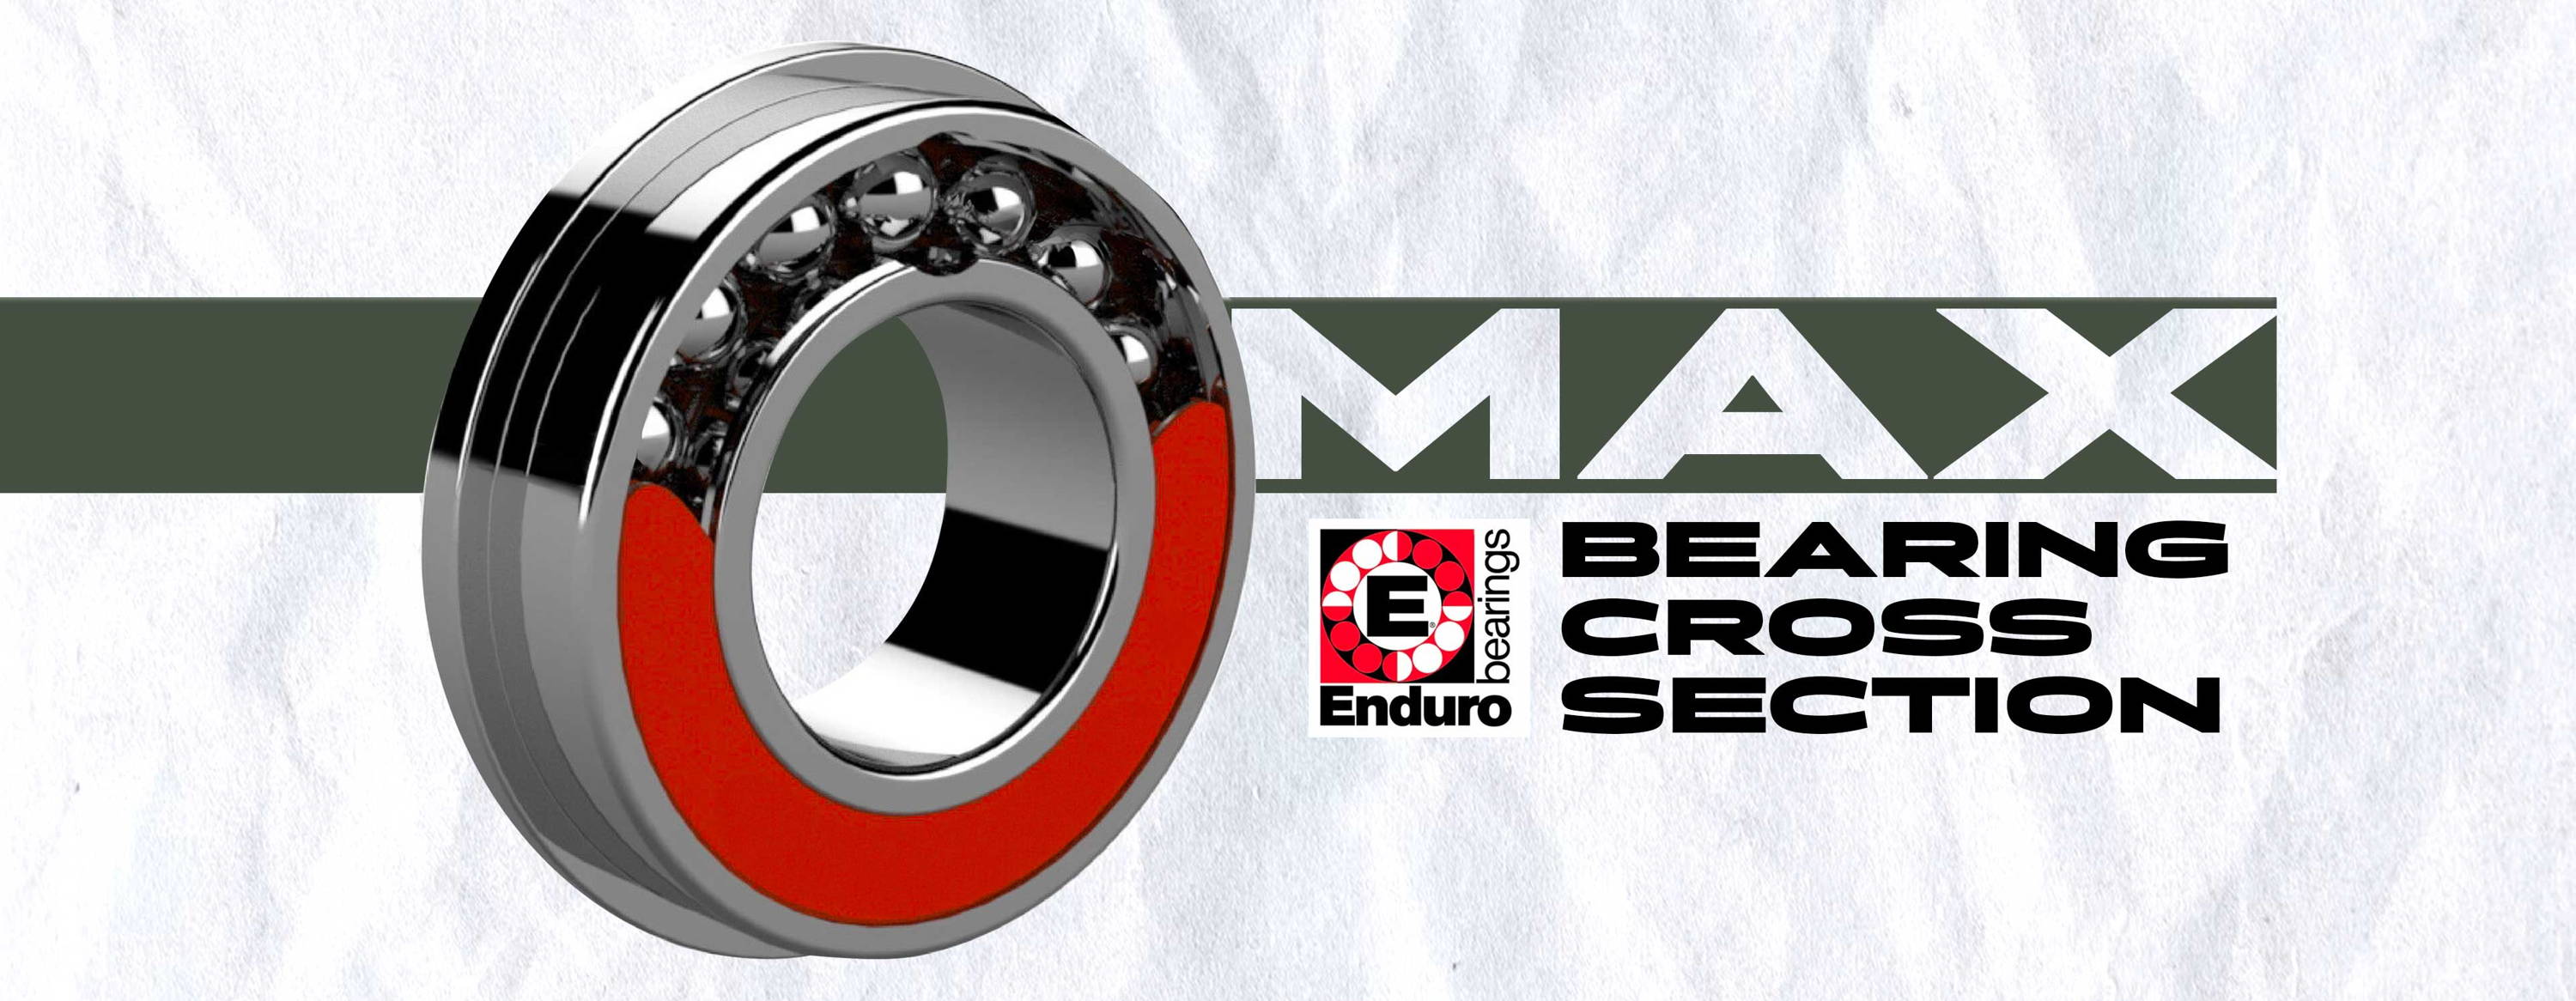 Enduro Max bearings graphic